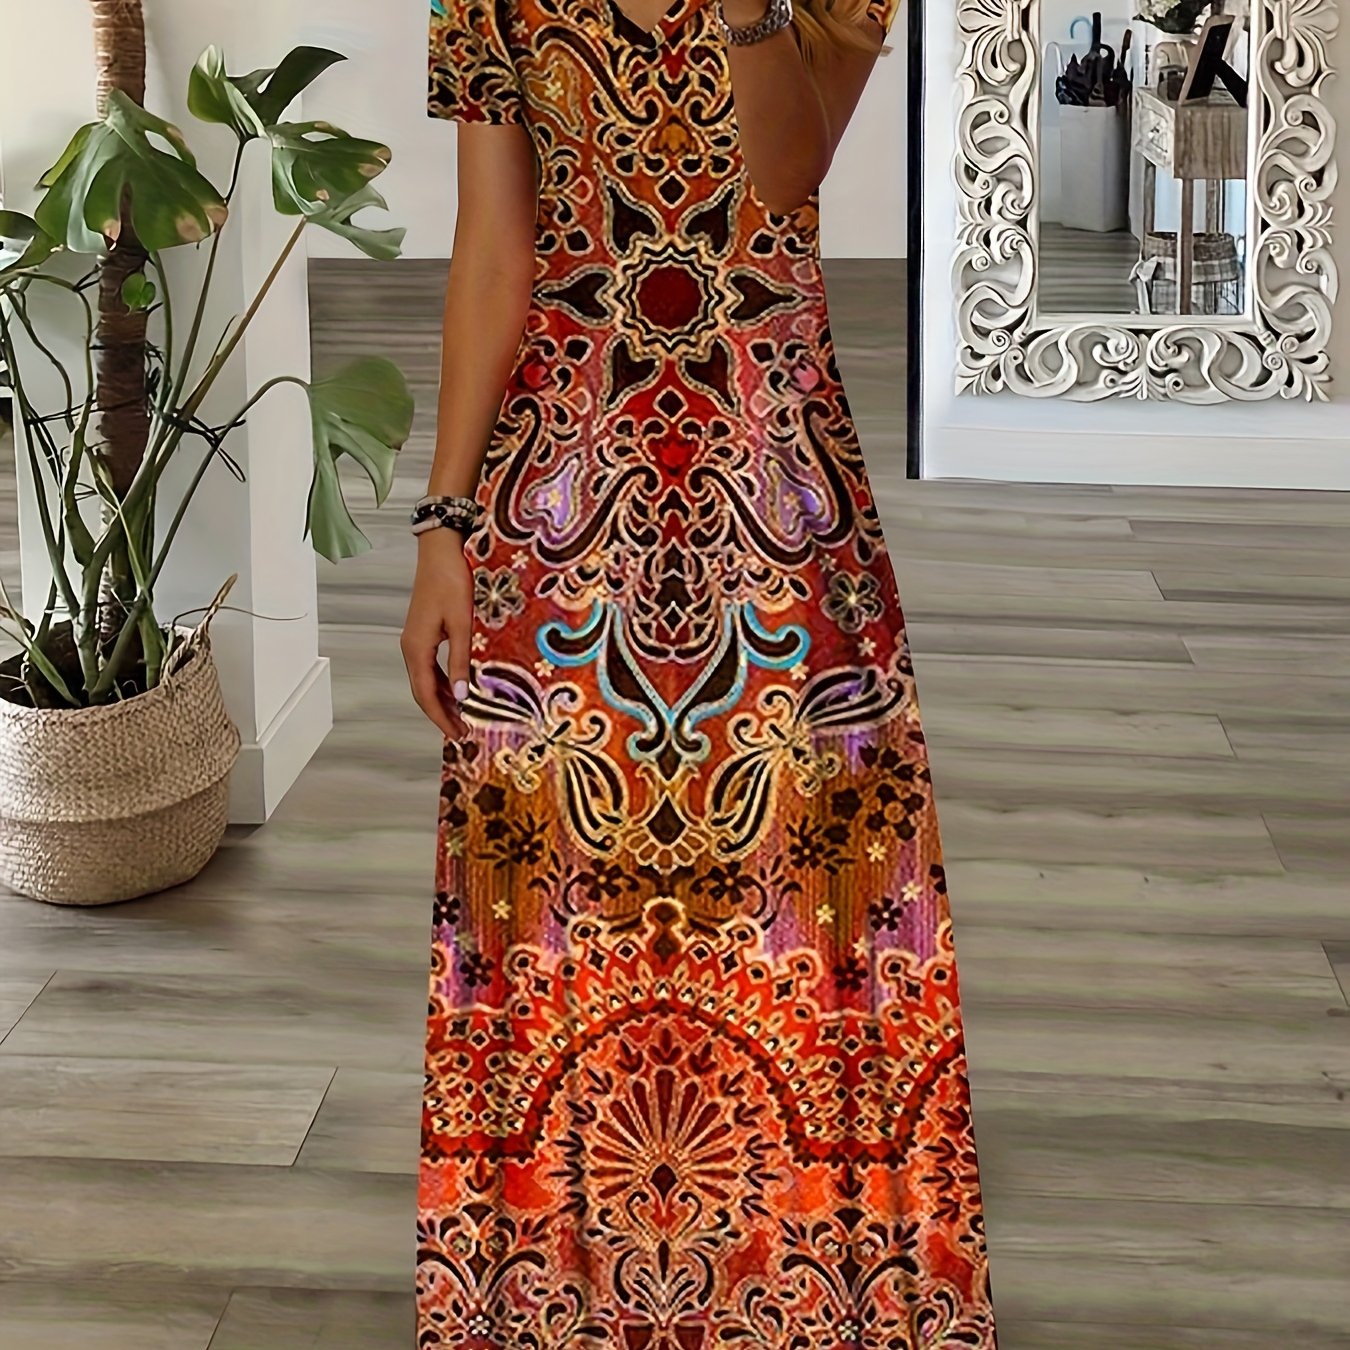 Antmvs Ethnic Floral Print Dress, Boho V Neck Short Sleeve Maxi Dress, Women's Clothing